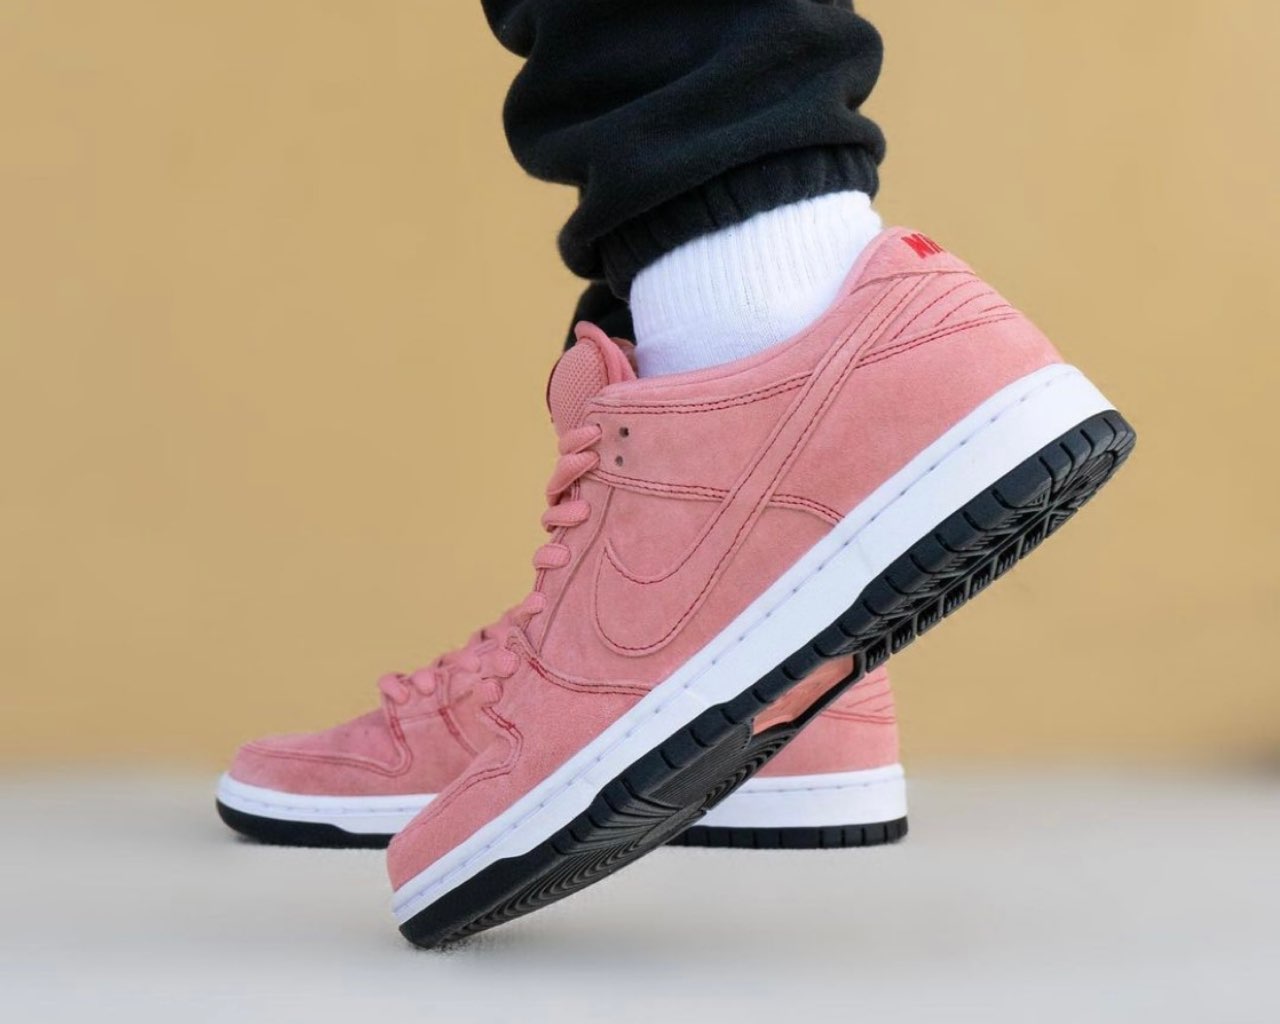 【Nike SB】Dunk Low Pro PRM “Pink Pig”が国内2021年2月1日/2月